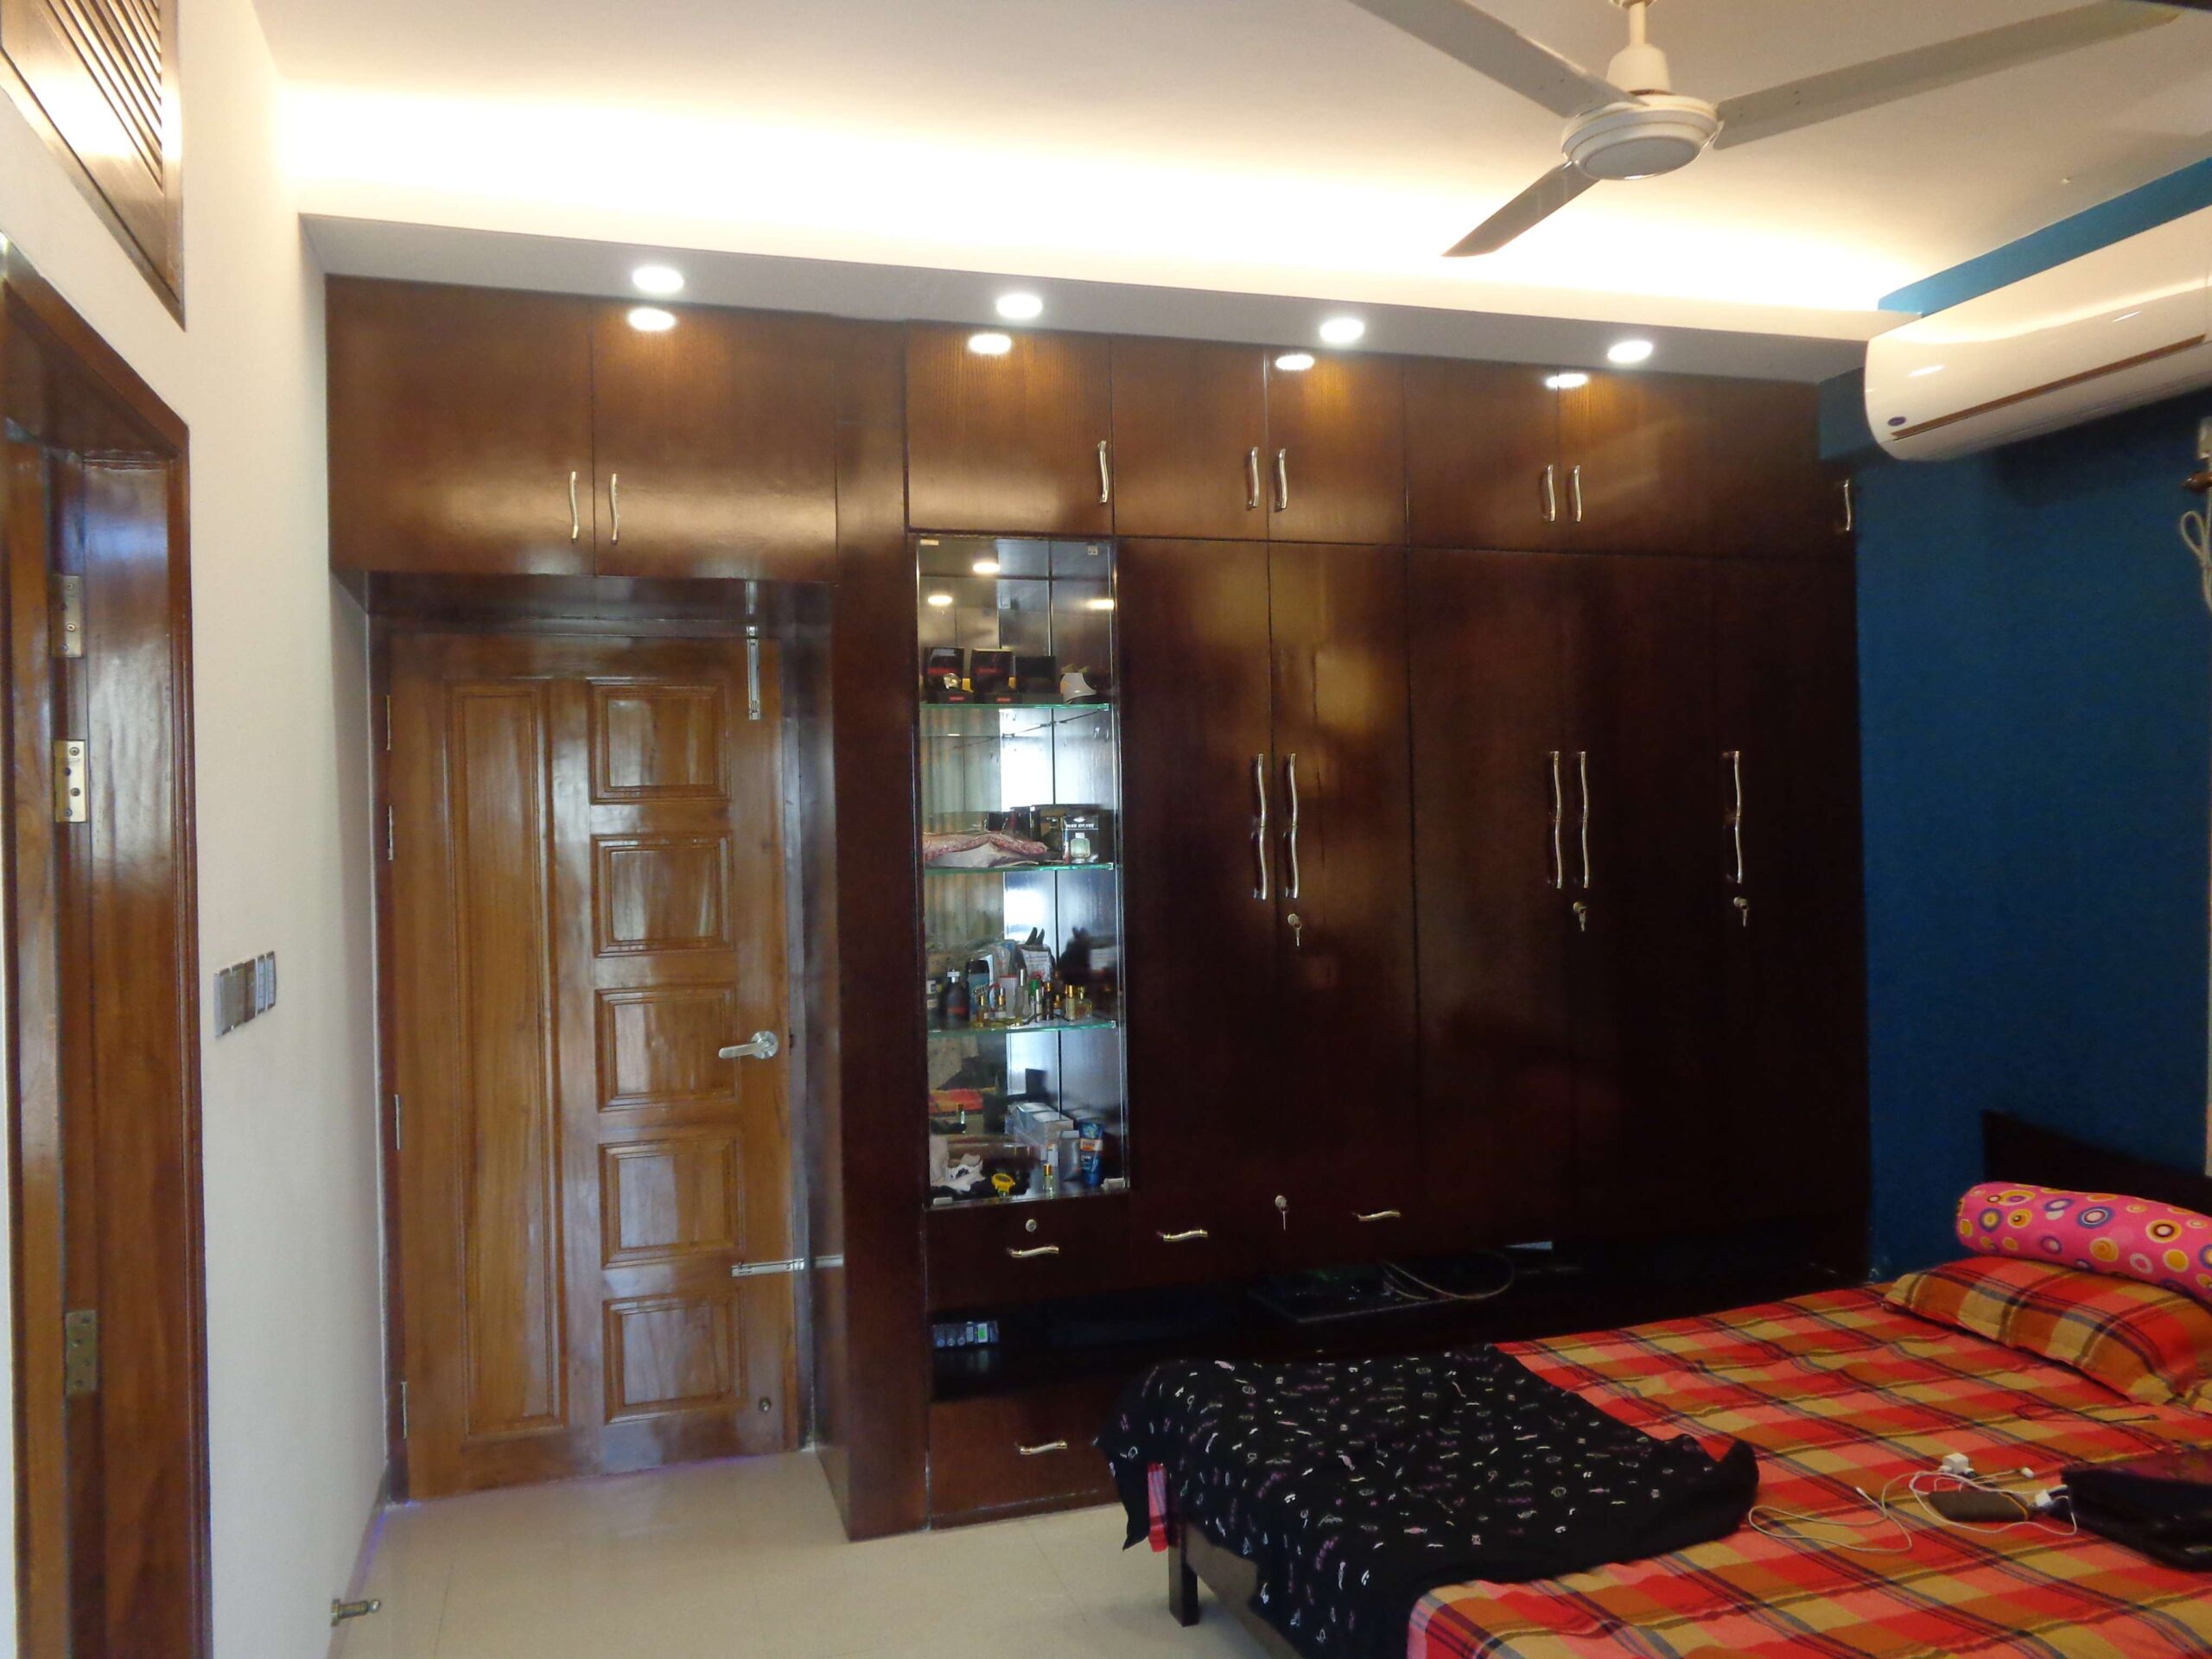 Yasin Mohammadpur Complete Project Master Bedroom Interior Design (16)